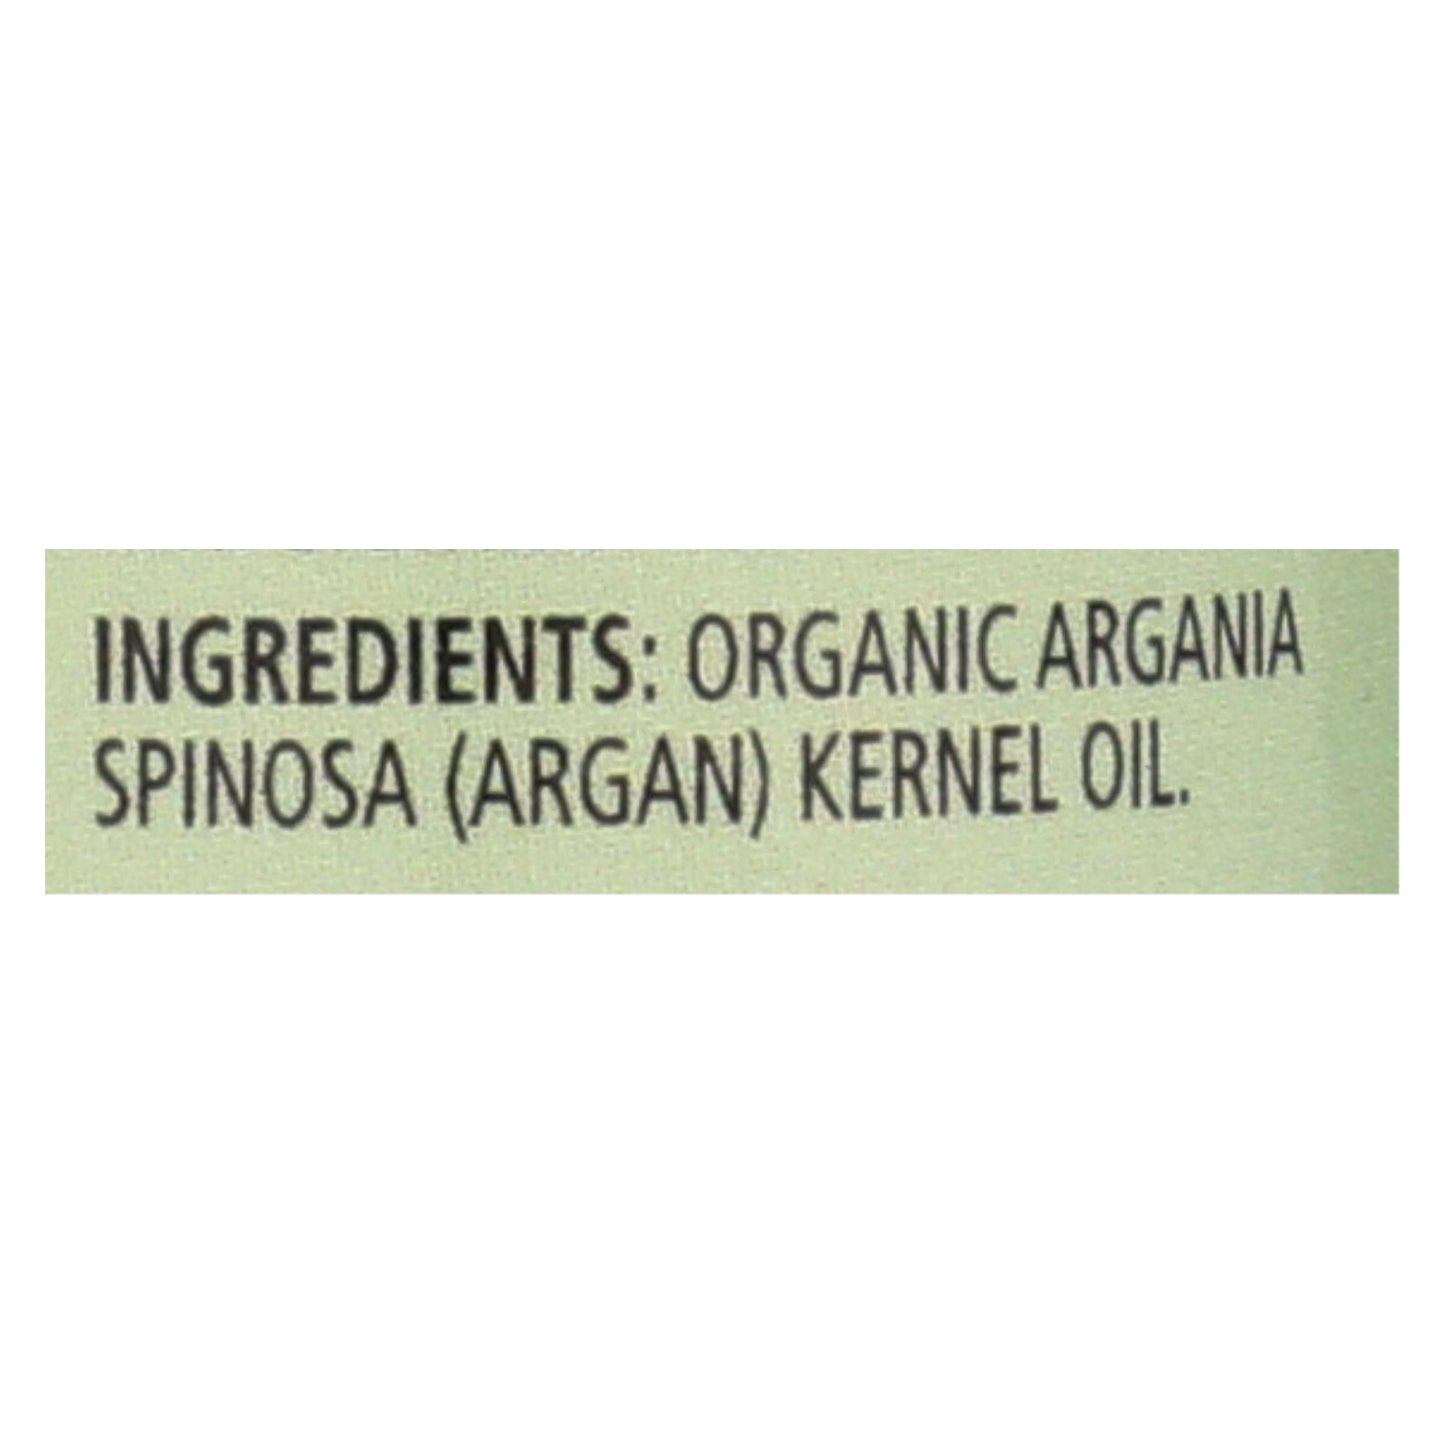 
                  
                    Aura Cacia Organic Argan Rejuvenating Skin Care Oil - 1 fl oz.
                  
                